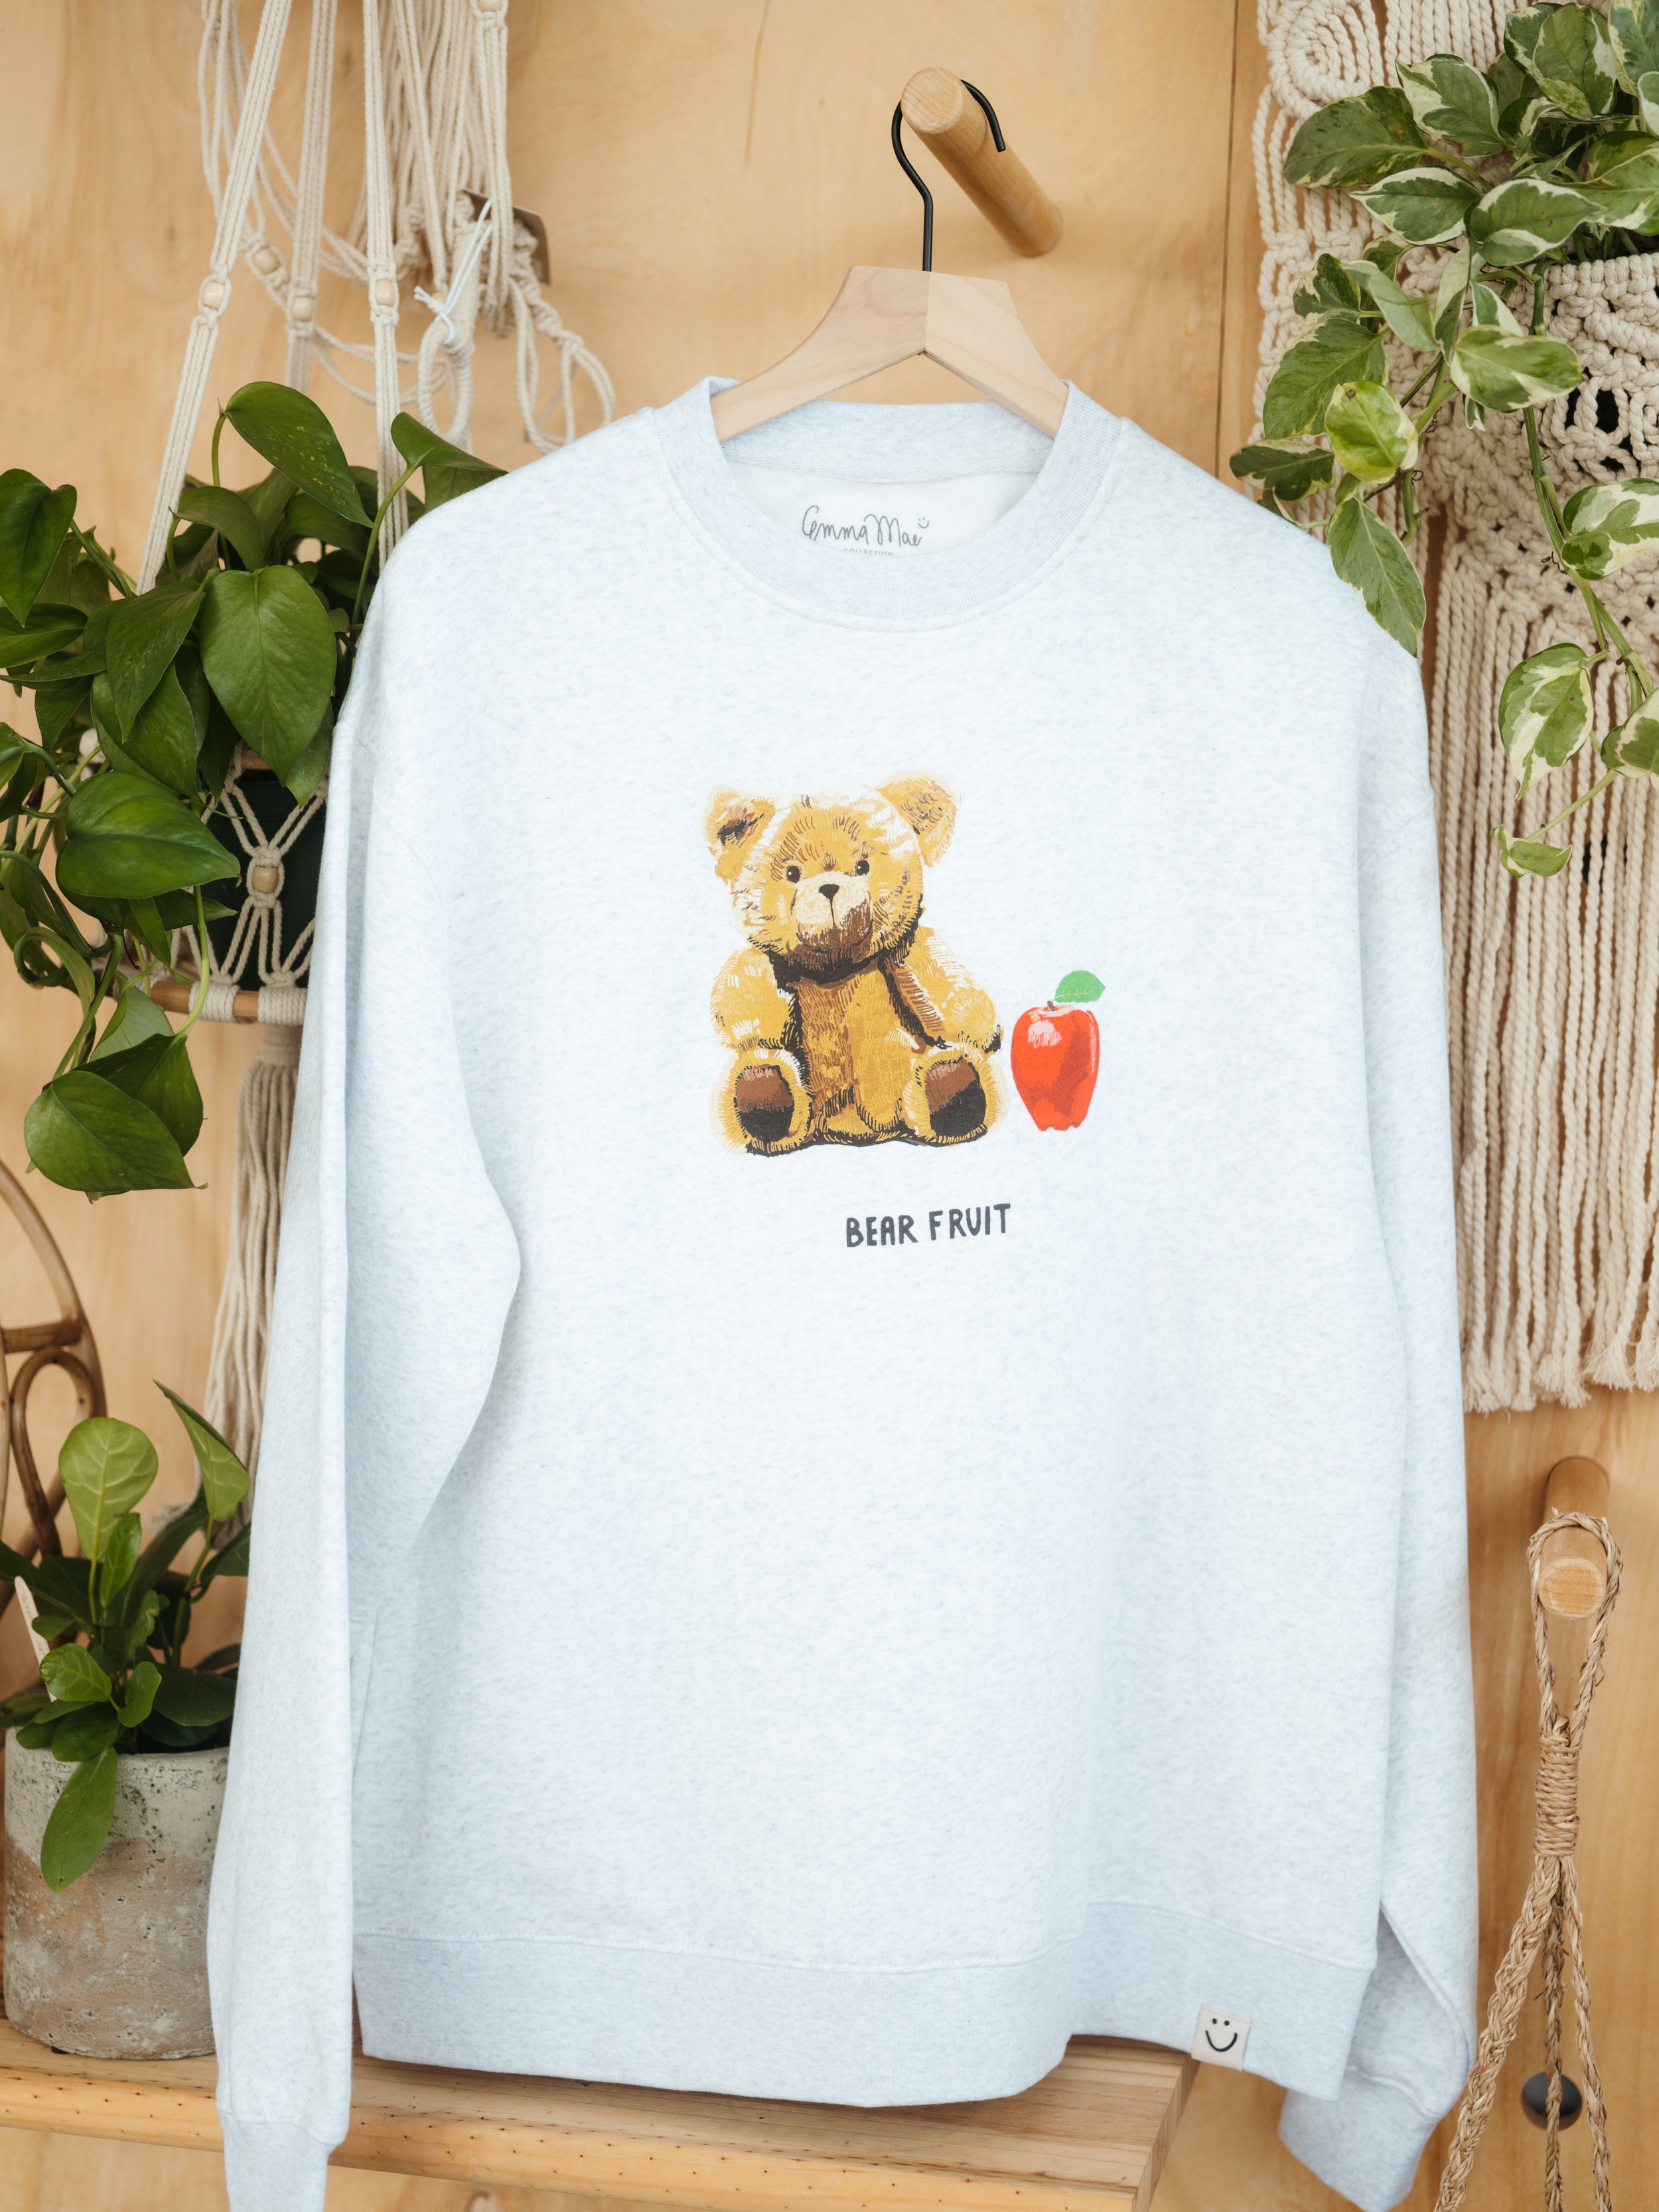 Bear Fruit — emma mae